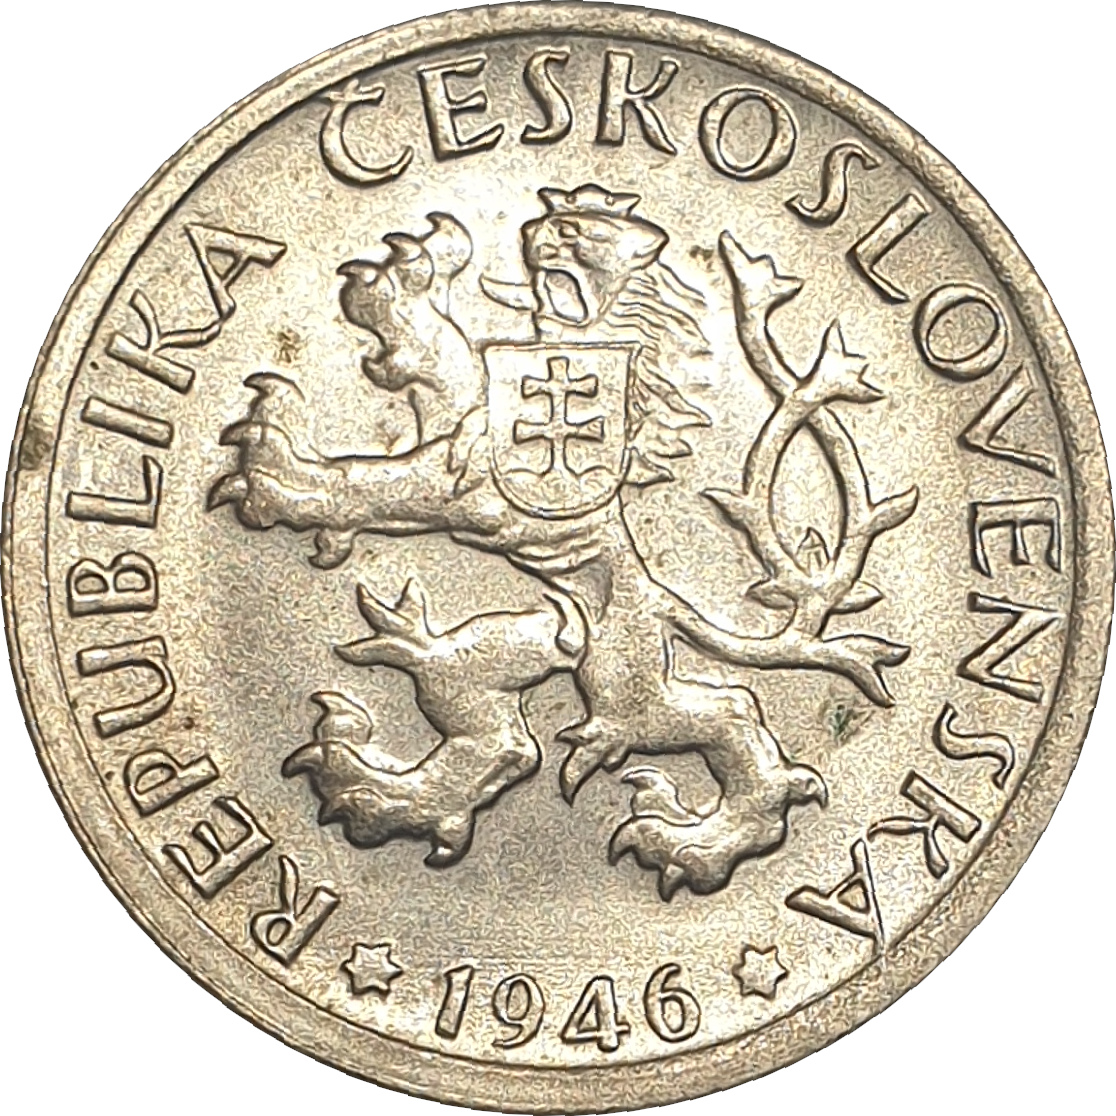 1 koruna - Lion héraldique